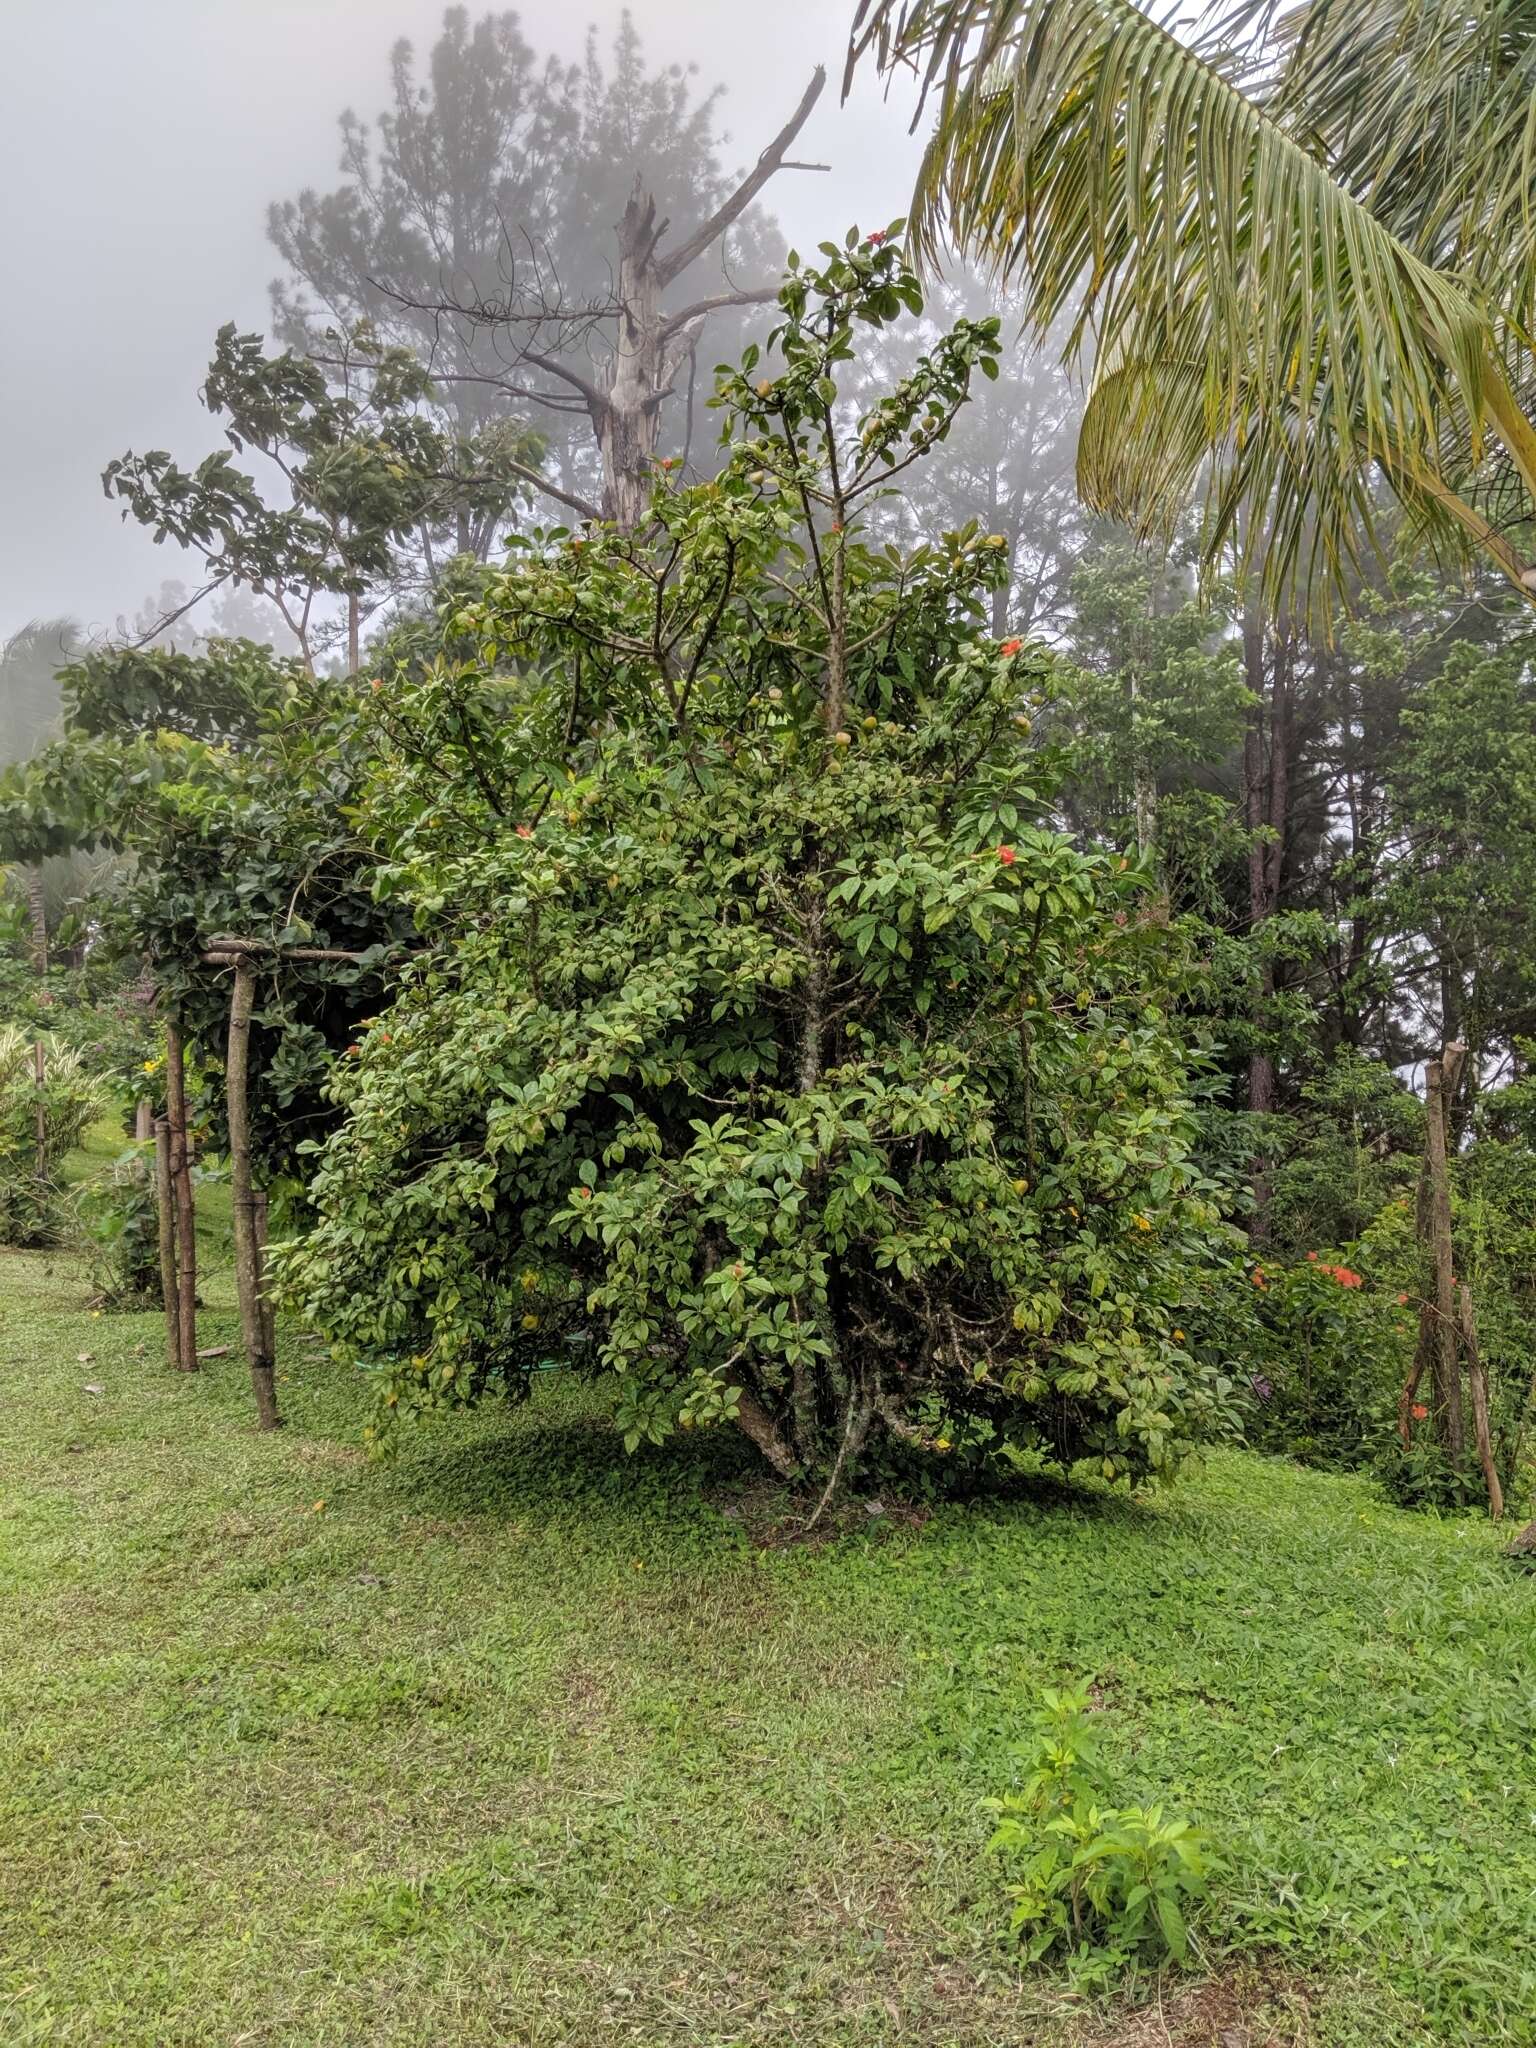 Image of <i>Leuenbergeria bleo</i>